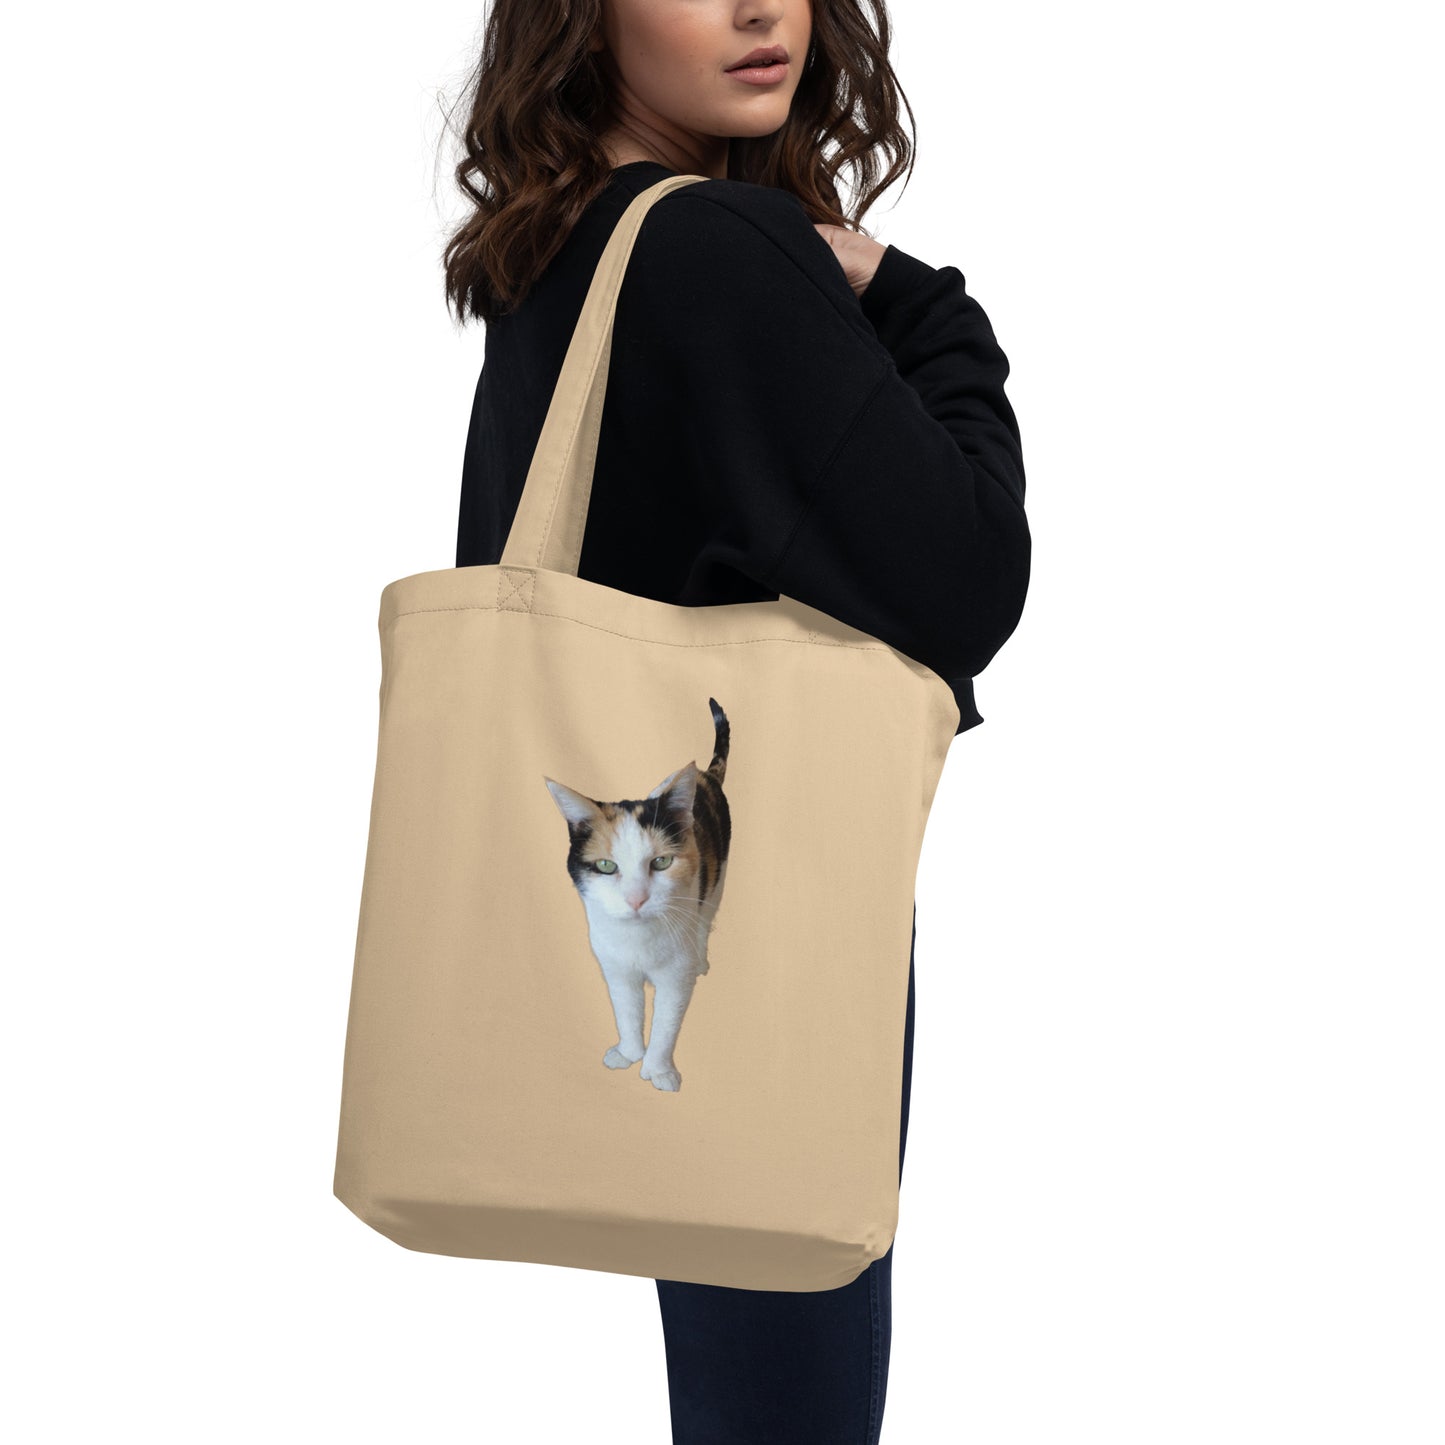 Calico Cat Tote Bag